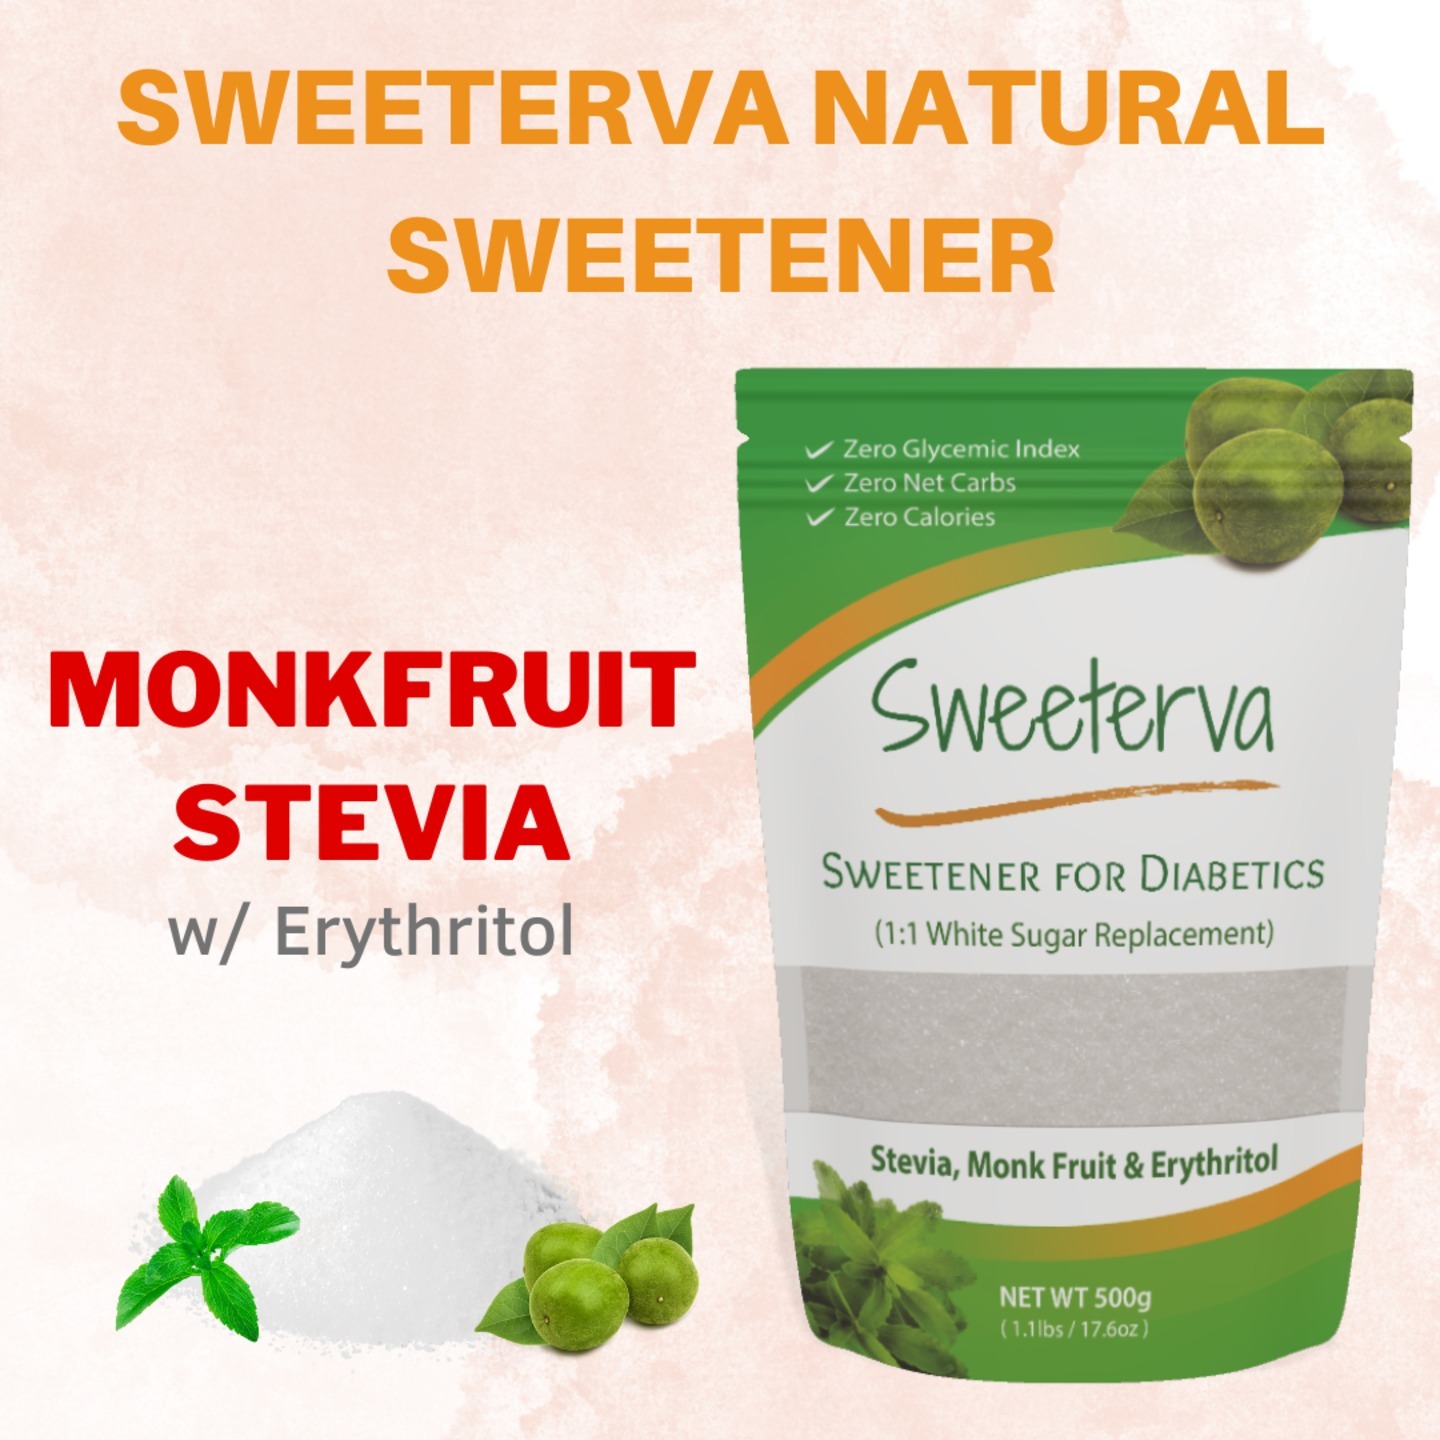 Sweeterva Natural Sweetener